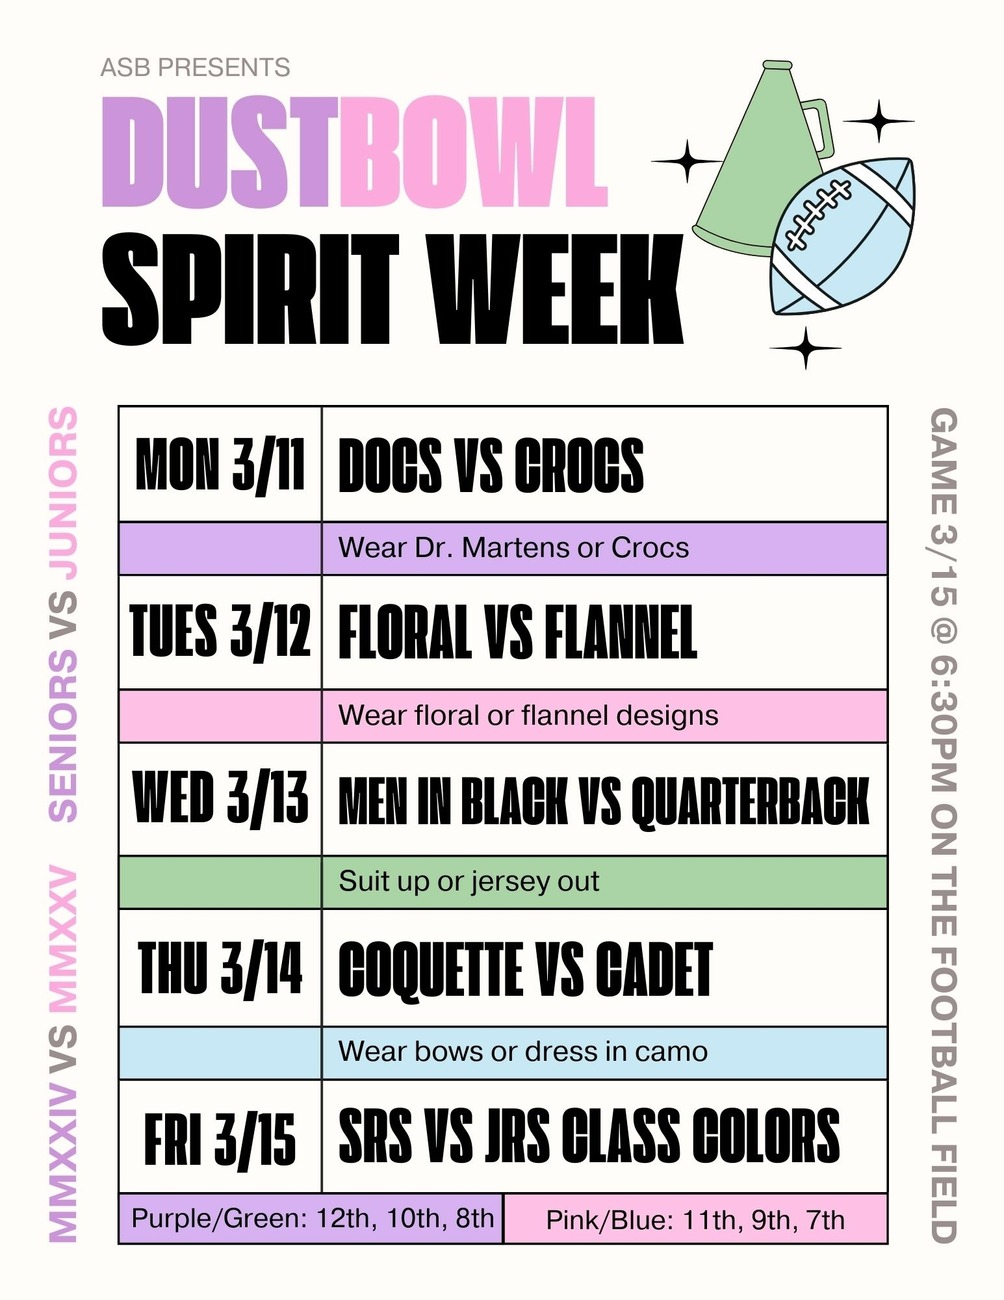 Dustbowl Spirit Week